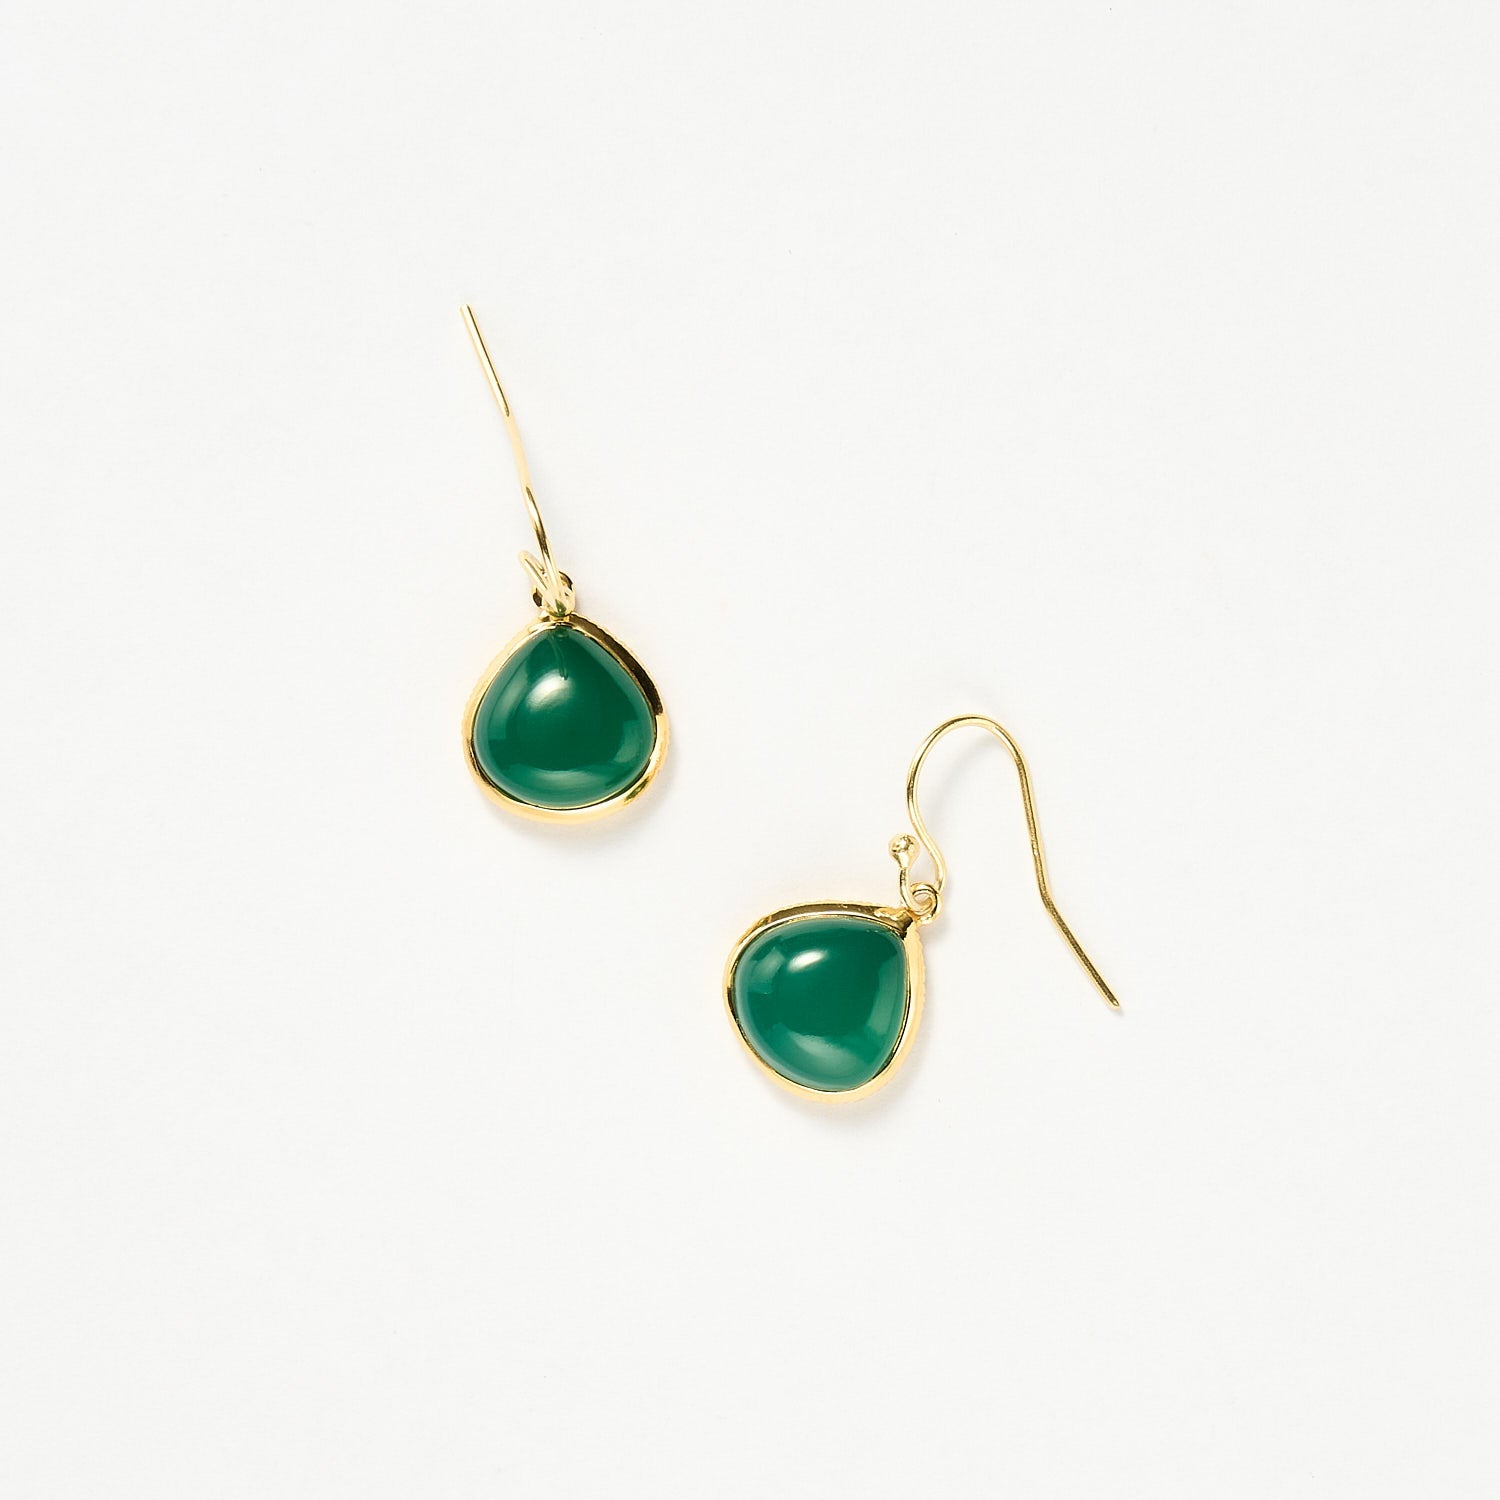 Maldives earrings - Green Onyx, Gold 